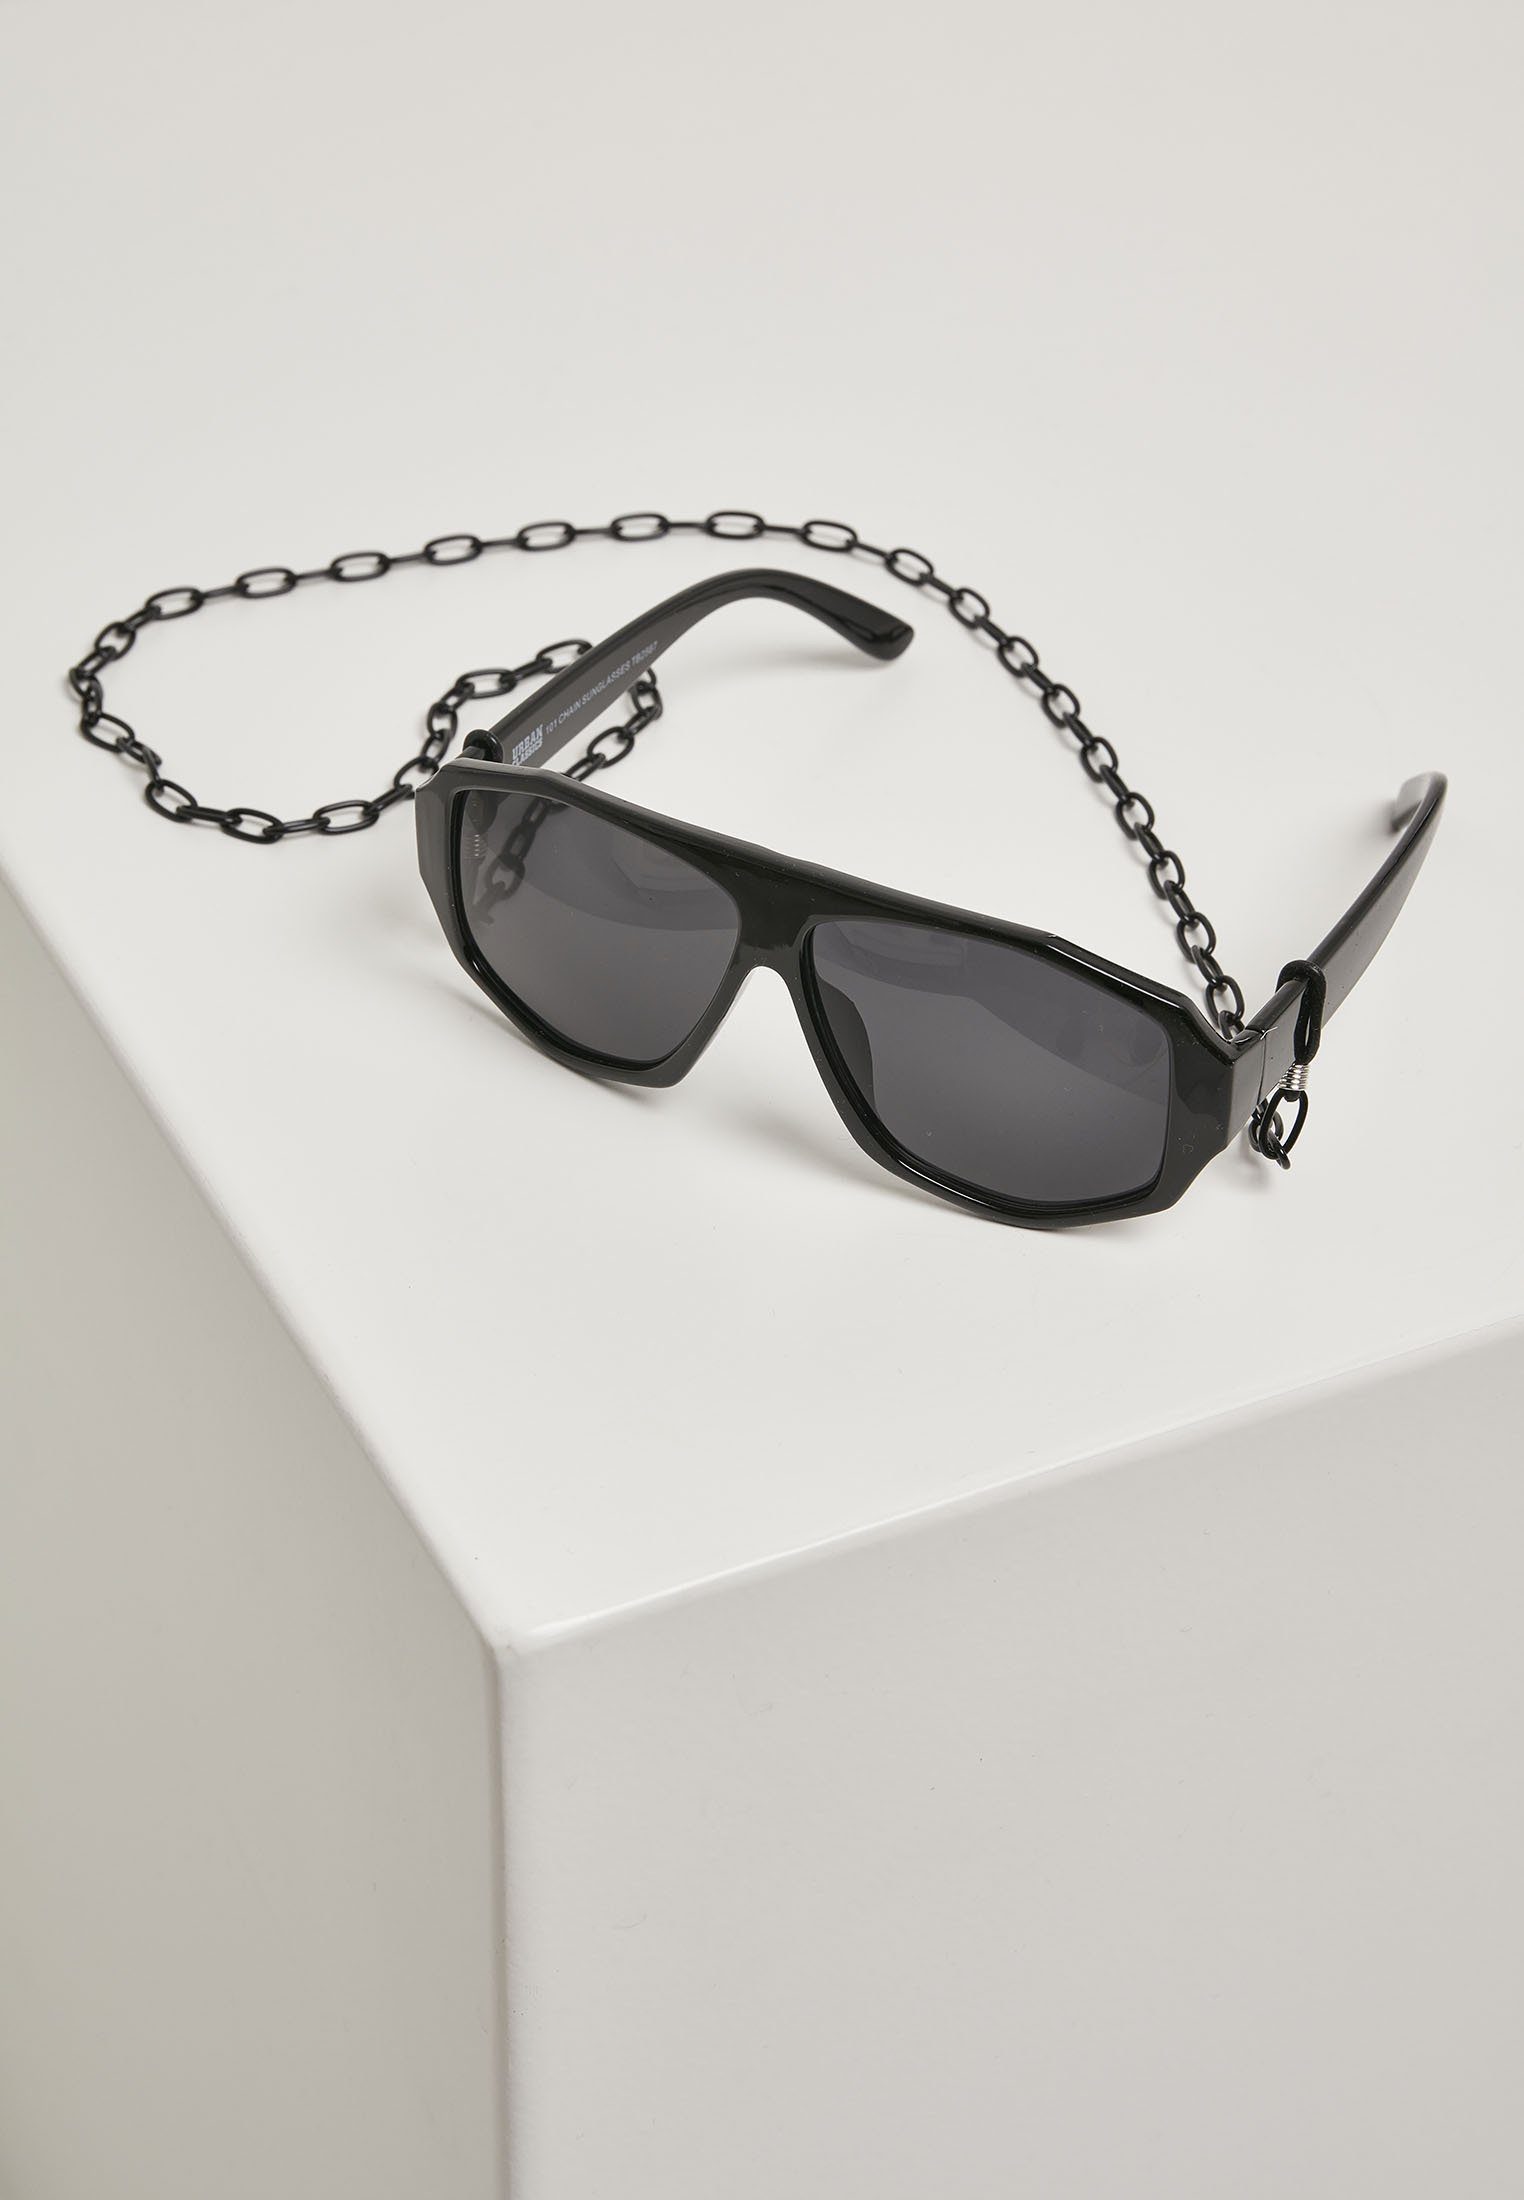 URBAN CLASSICS Sonnenbrille Unisex 101 Chain Chain black/black Sunglasses 101 TB2567